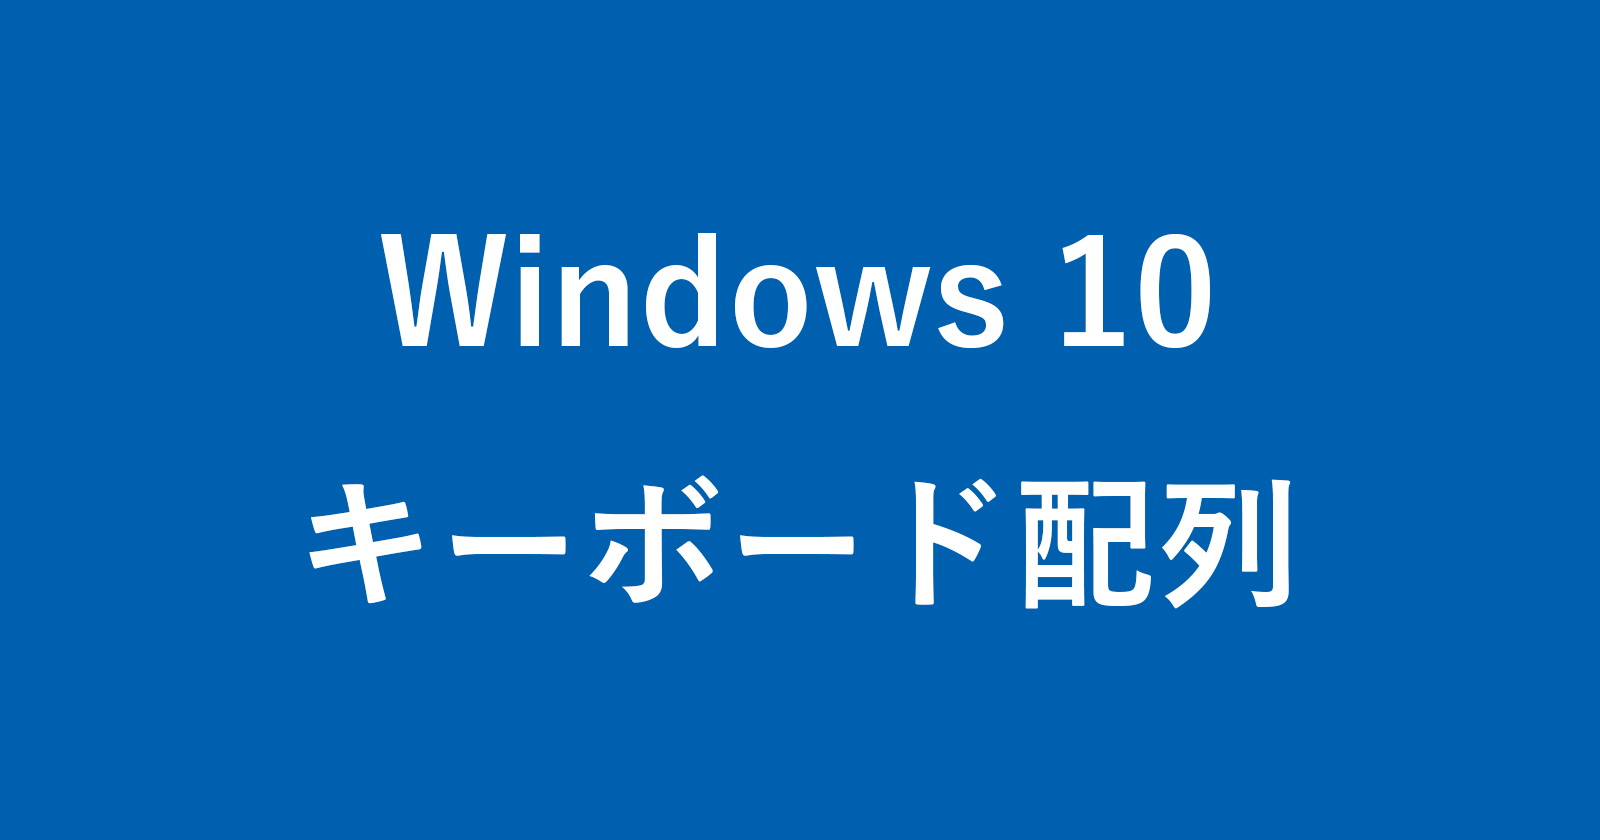 windows 10 keyboard layout